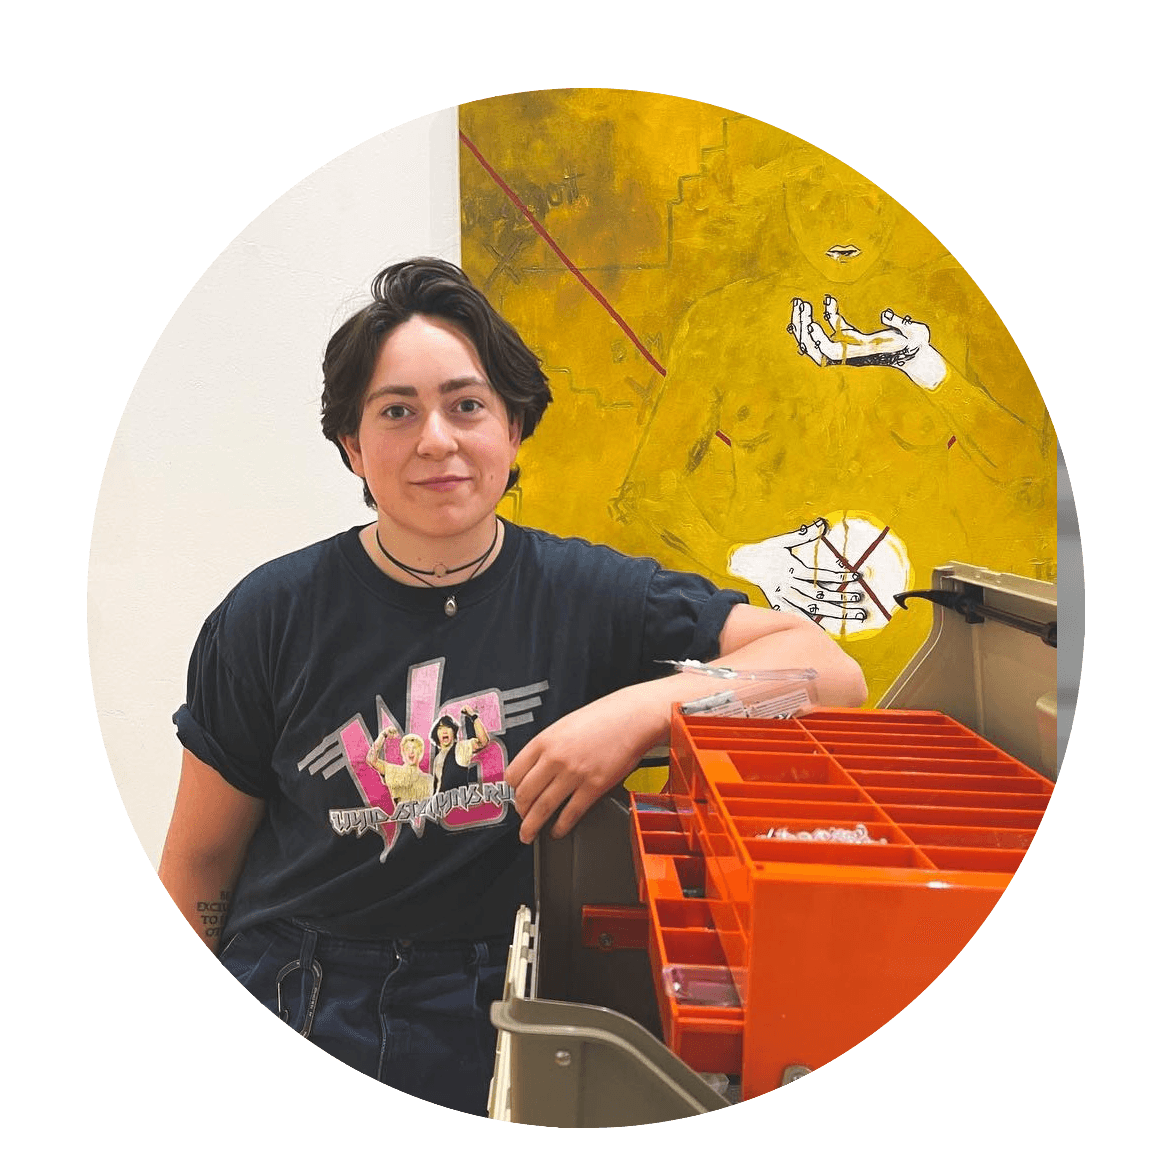 DELANEY WASCHEROL | Print Shop Assistant